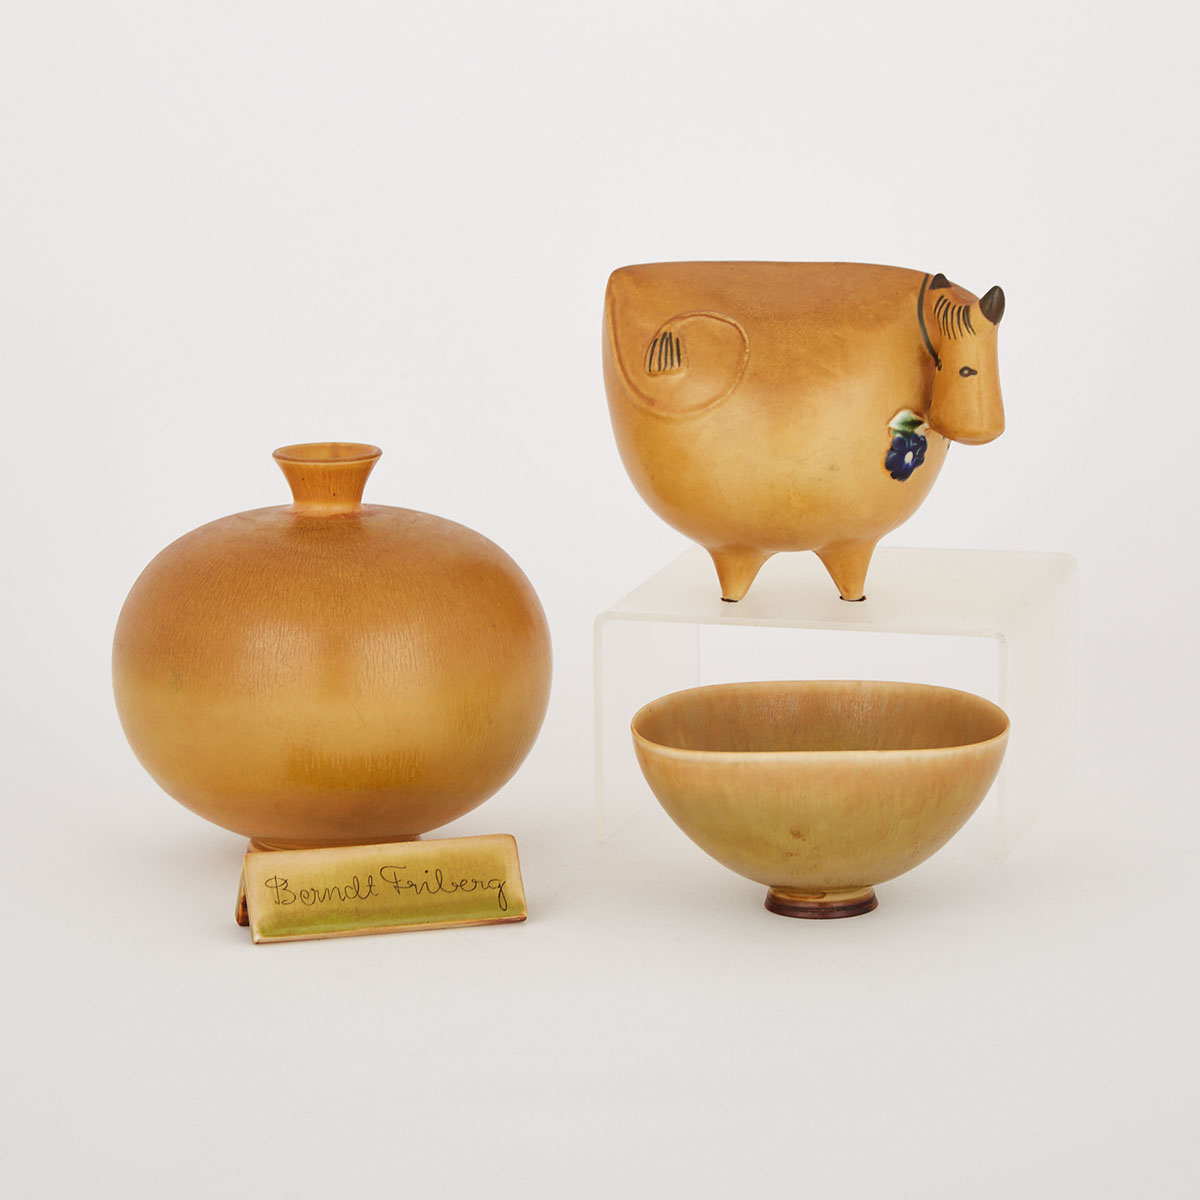 Berndt Friberg ‘Hare’s Fur’ Glazed Vase, Bowl and Display Plaque and Gustavsberg Cow, Lisa Larsen, 1960s